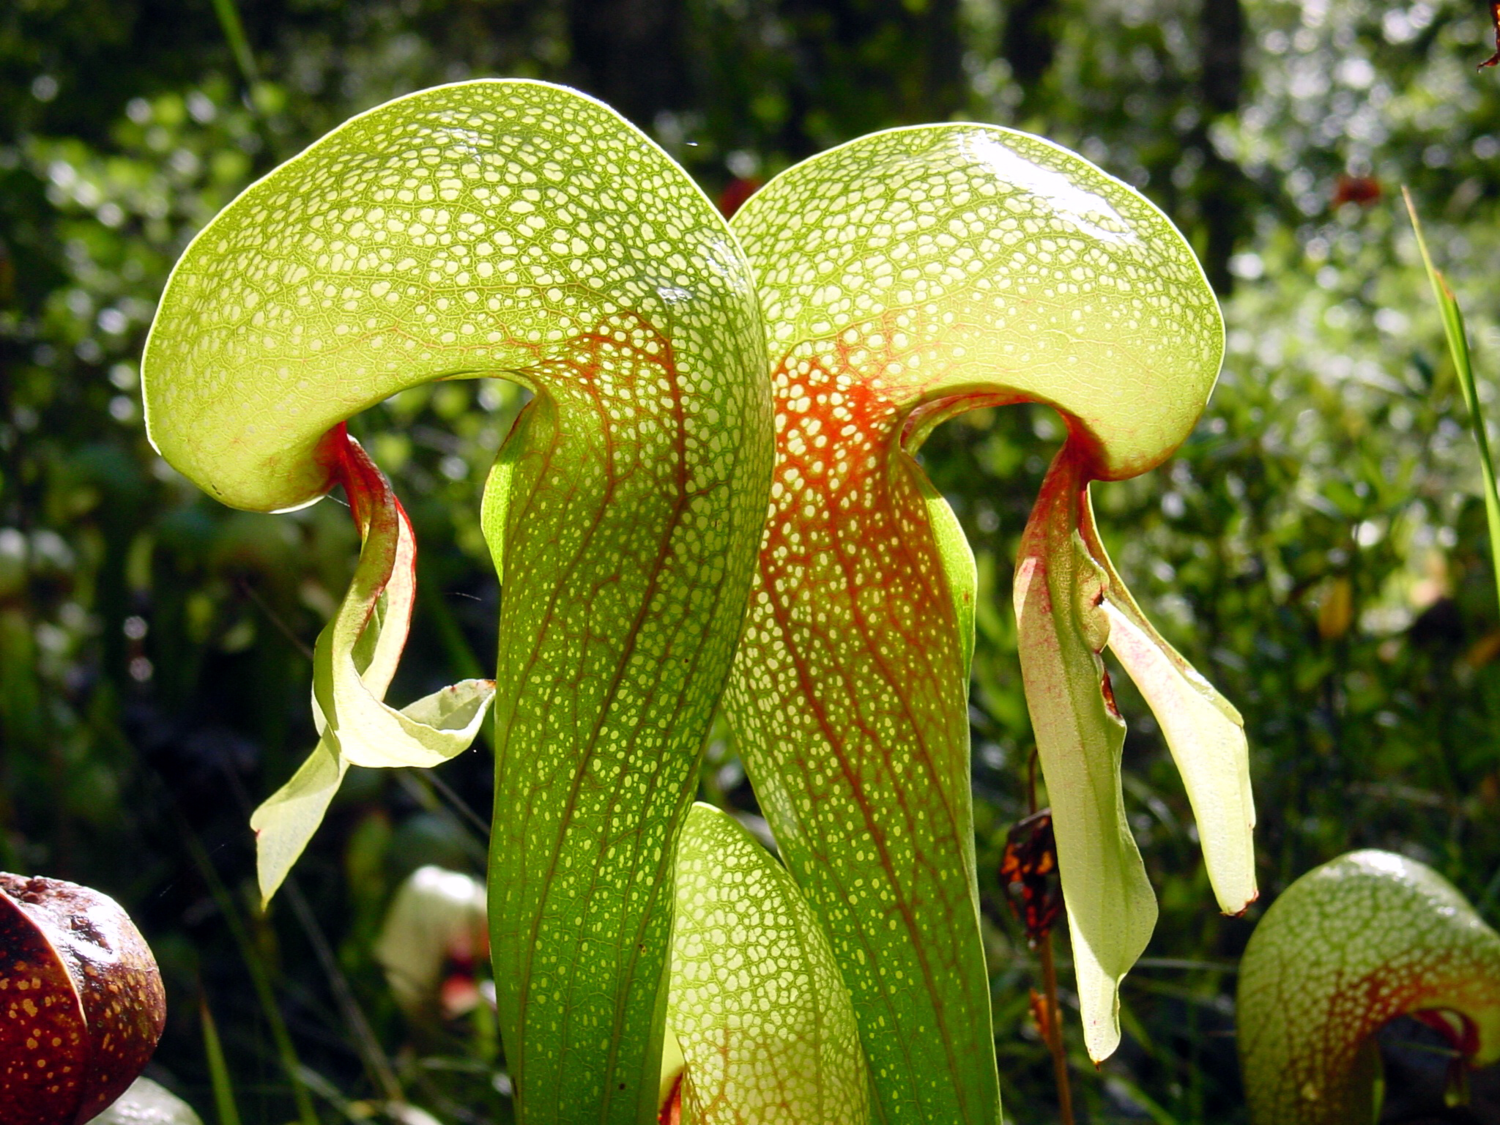 Darlingtonia californica “Cobra Lily” large adult plant